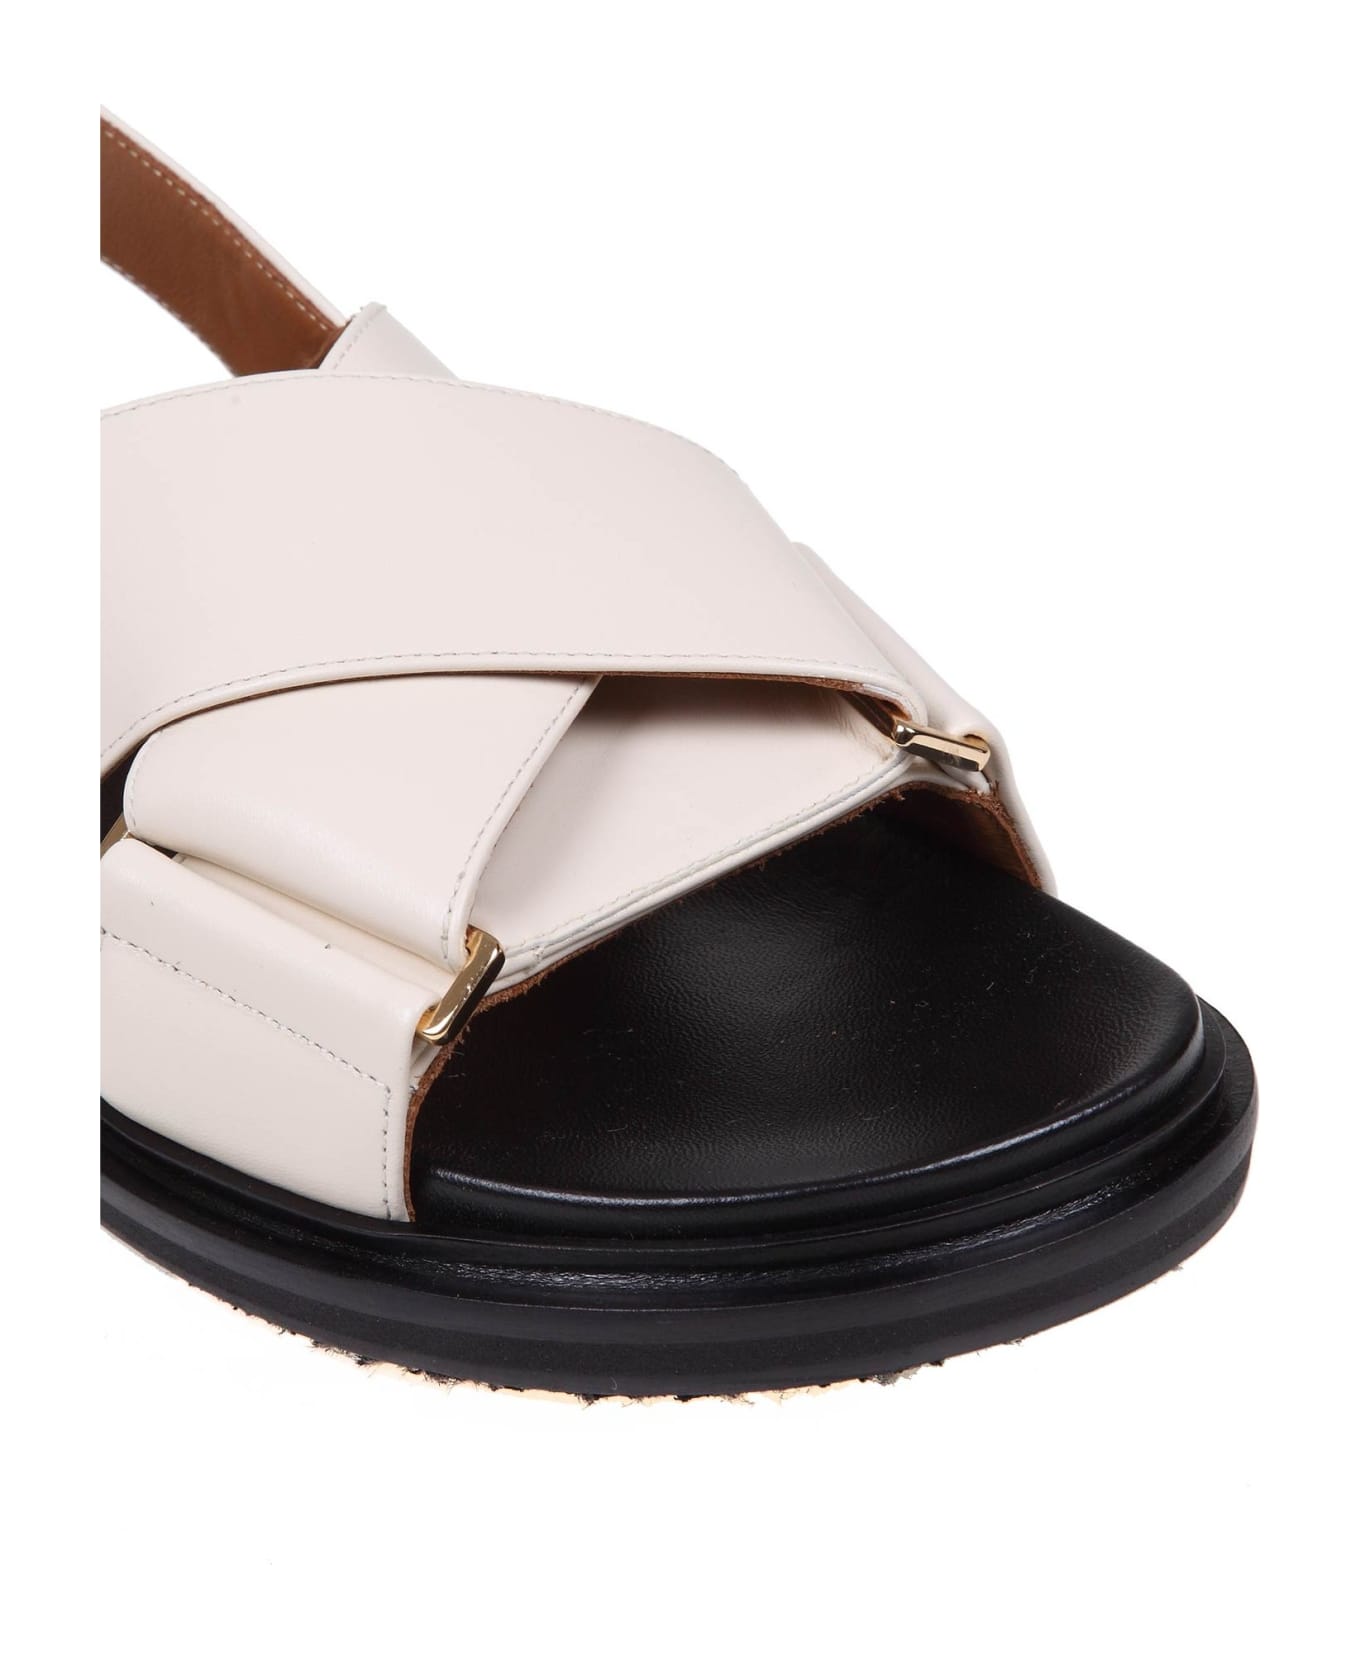 Marni Fussbett Sandal In White Leather - CREAM